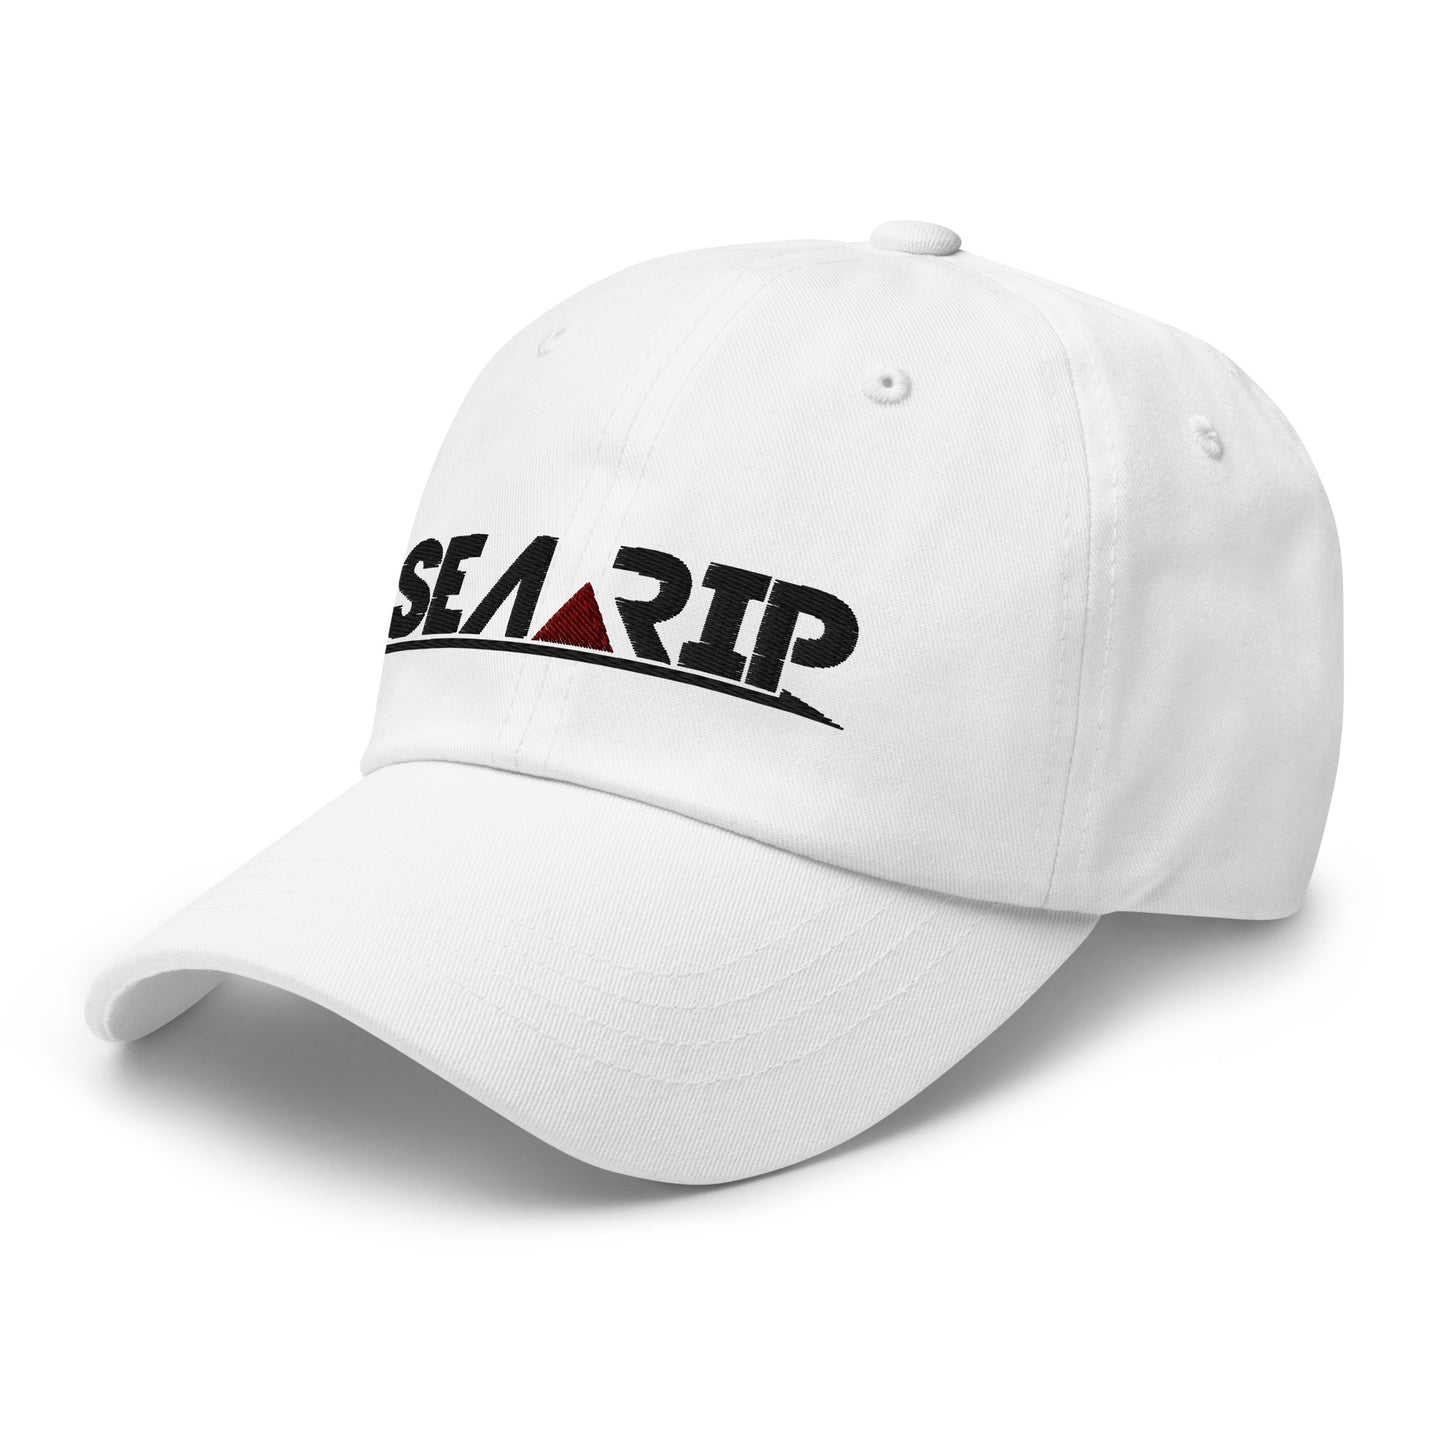 SEARIP Baseball Hat Black Logo